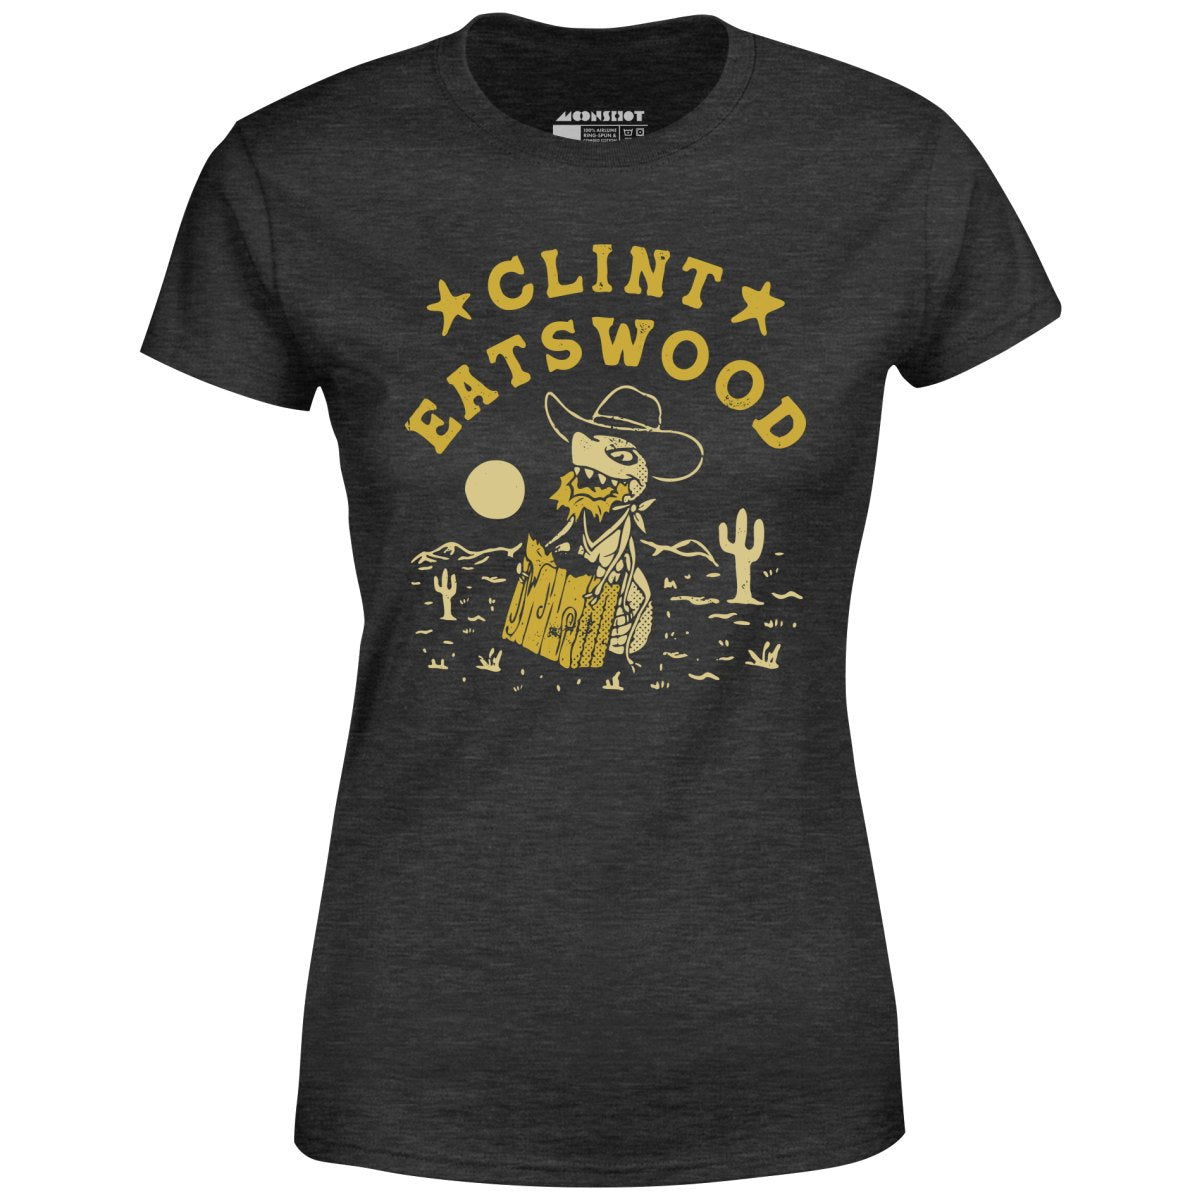 Clint Eatswood - Women's T-Shirt